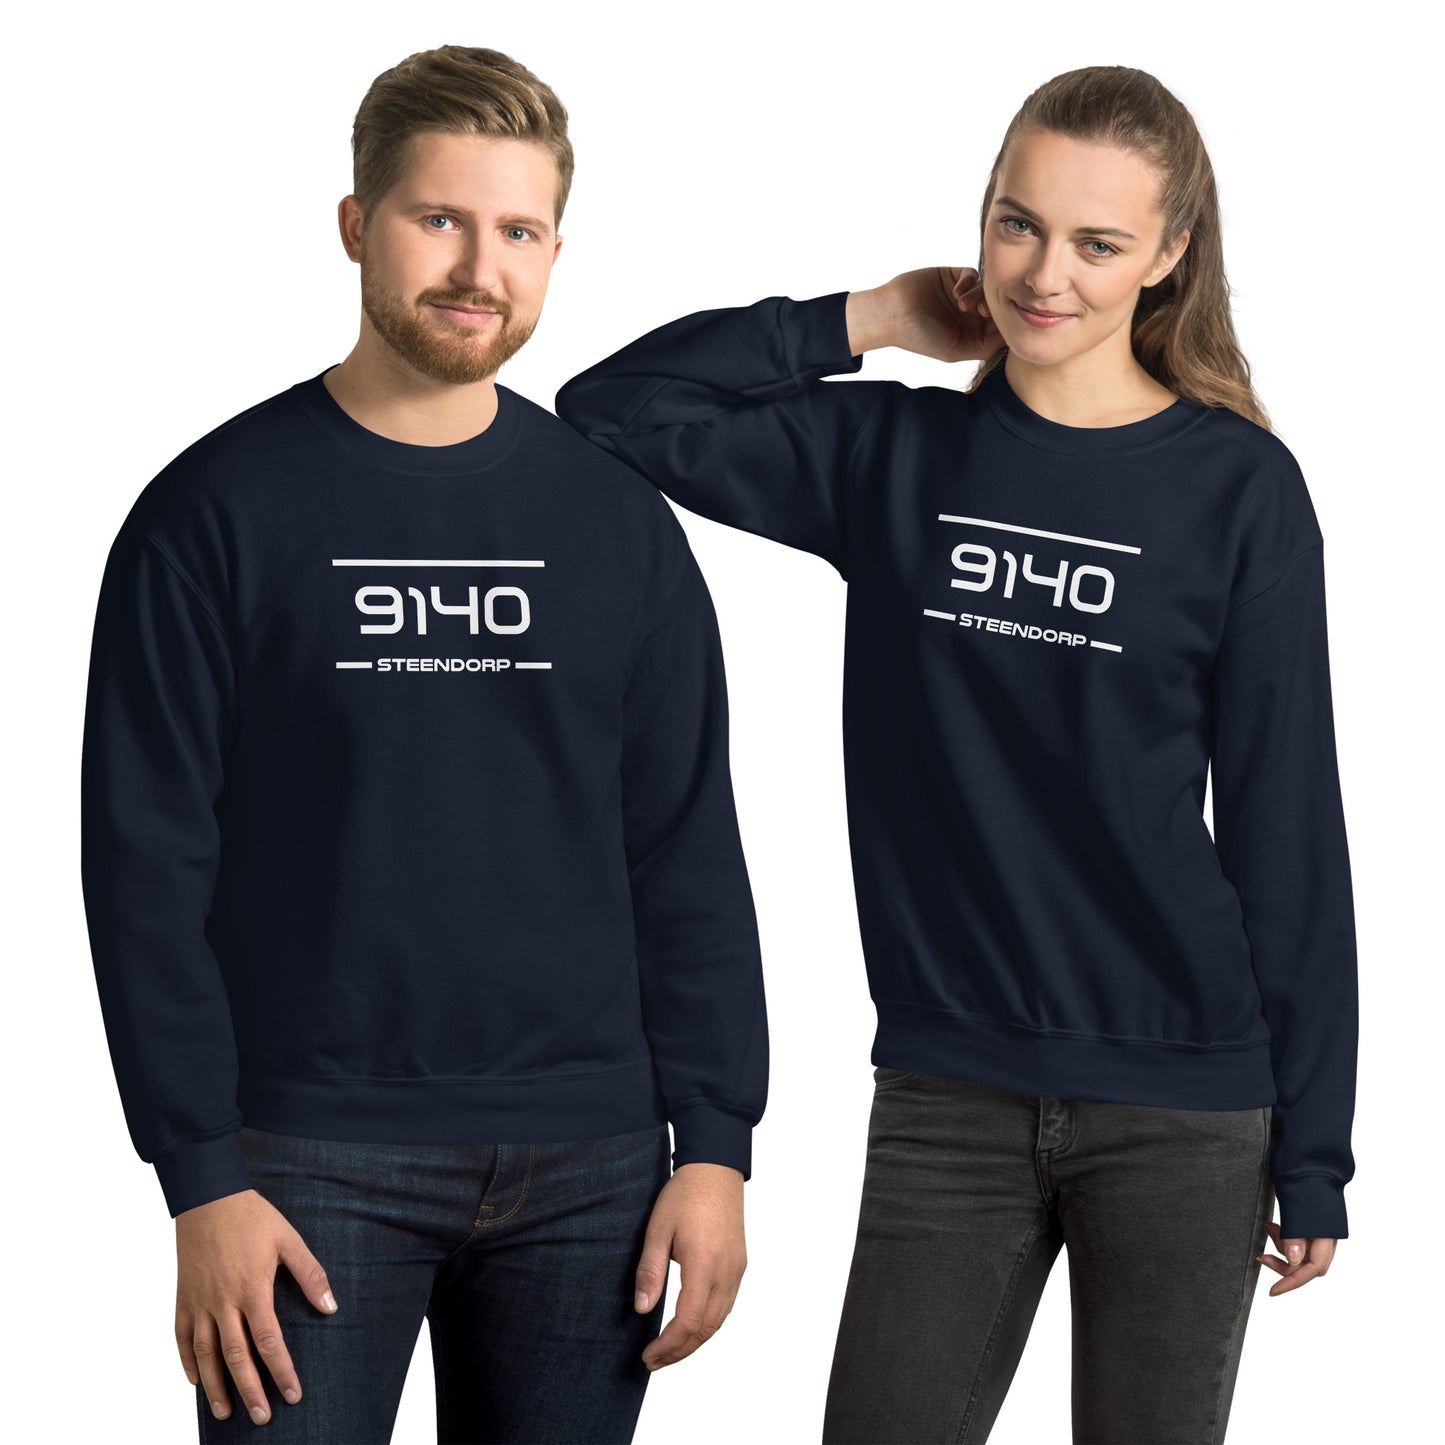 Sweater - 9140 - Steendorp (M/V)